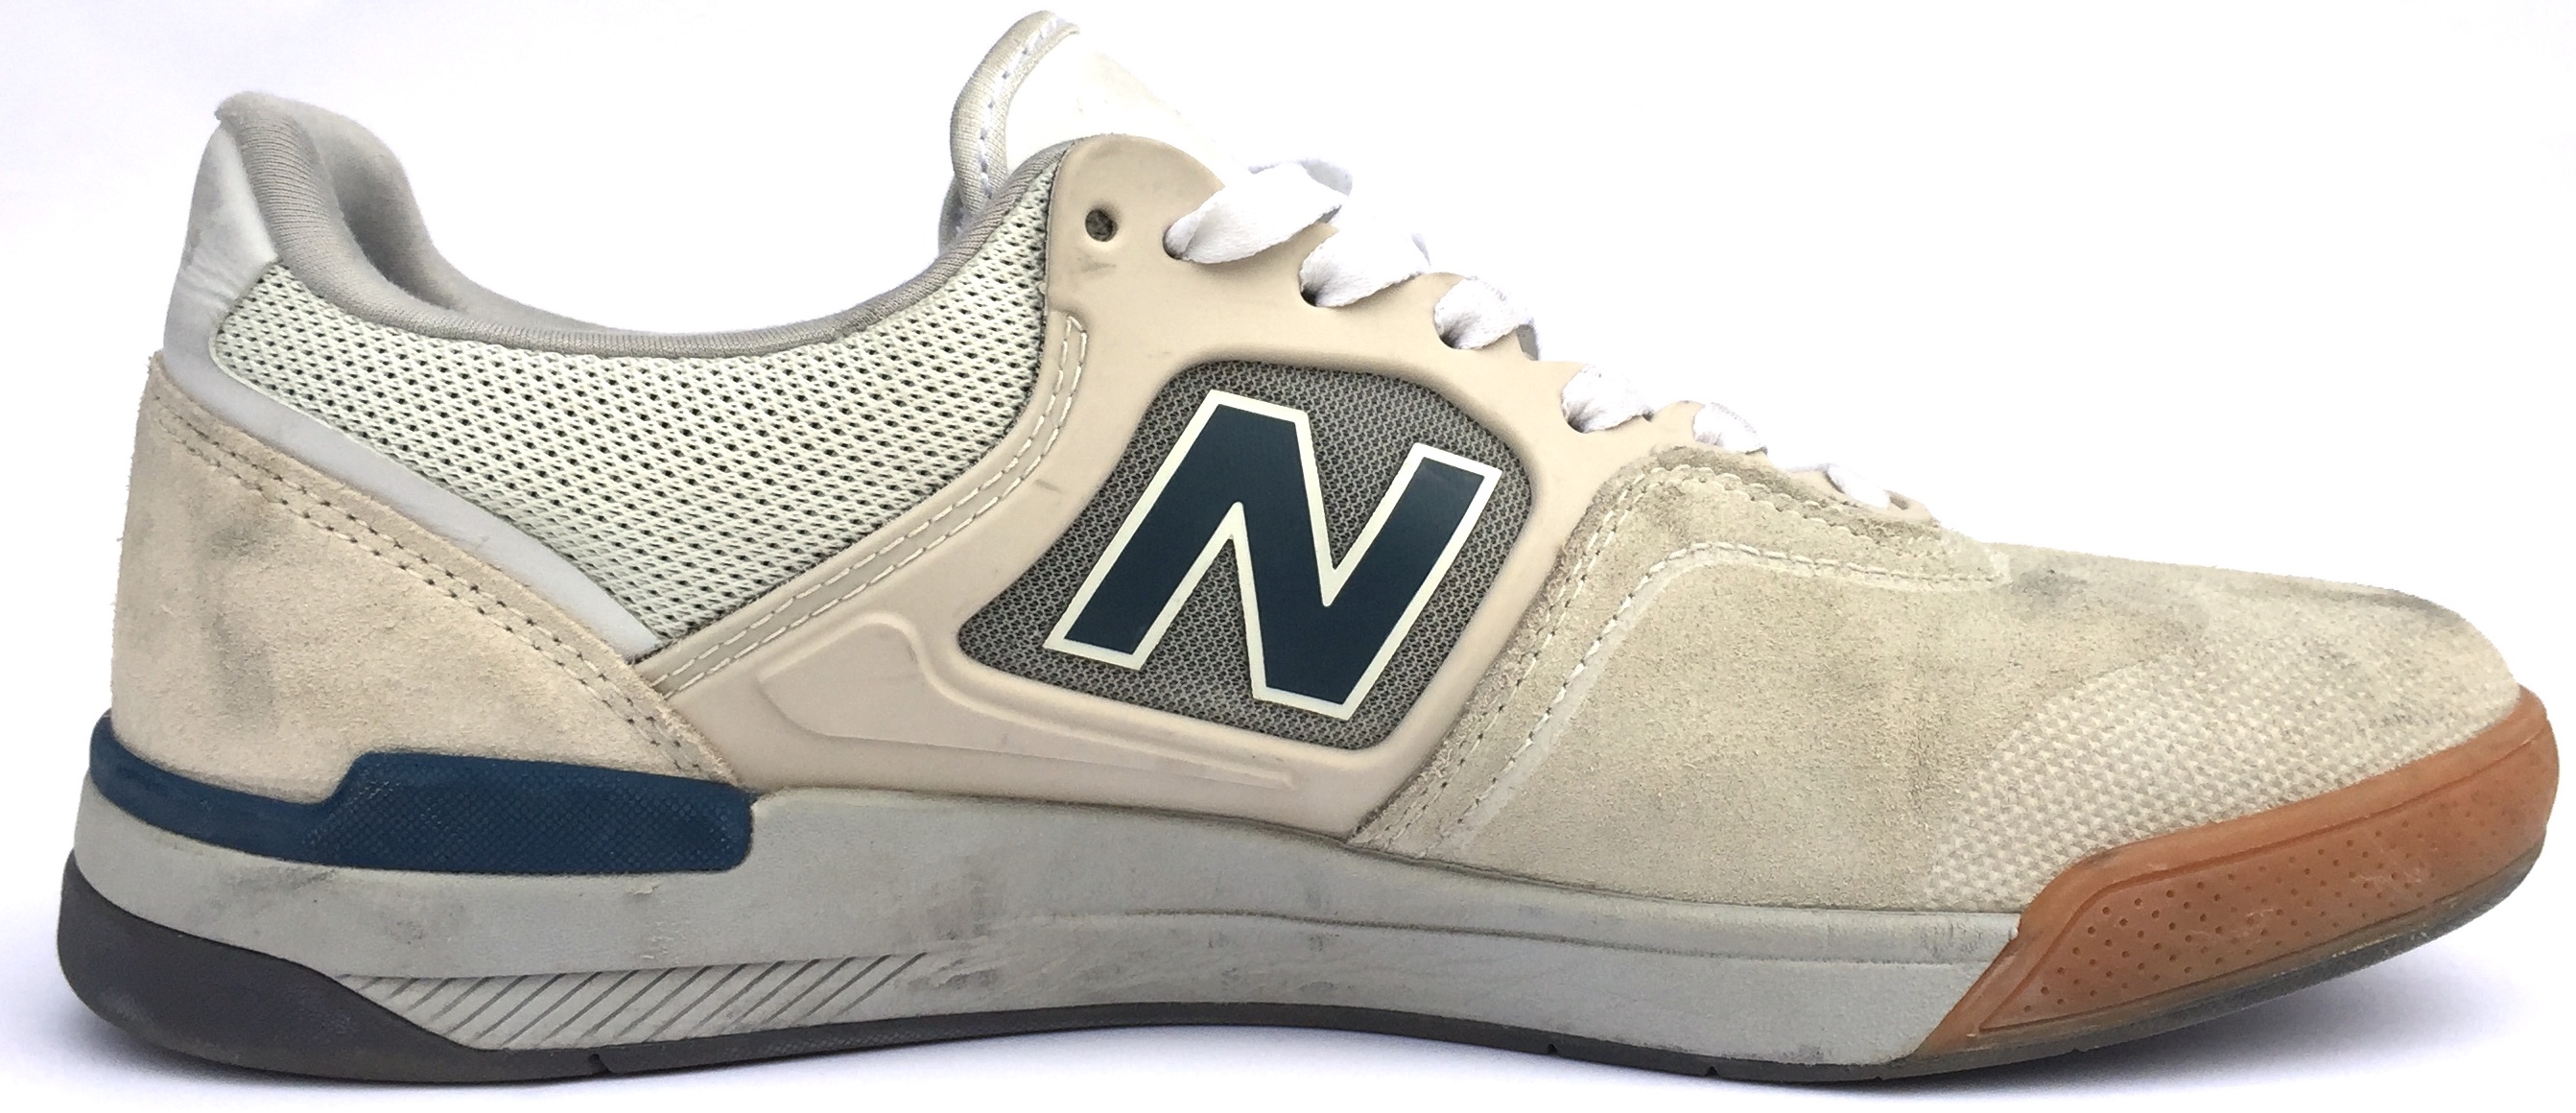 NB# Westagte 913 - Weartested - detailed skate shoe reviews